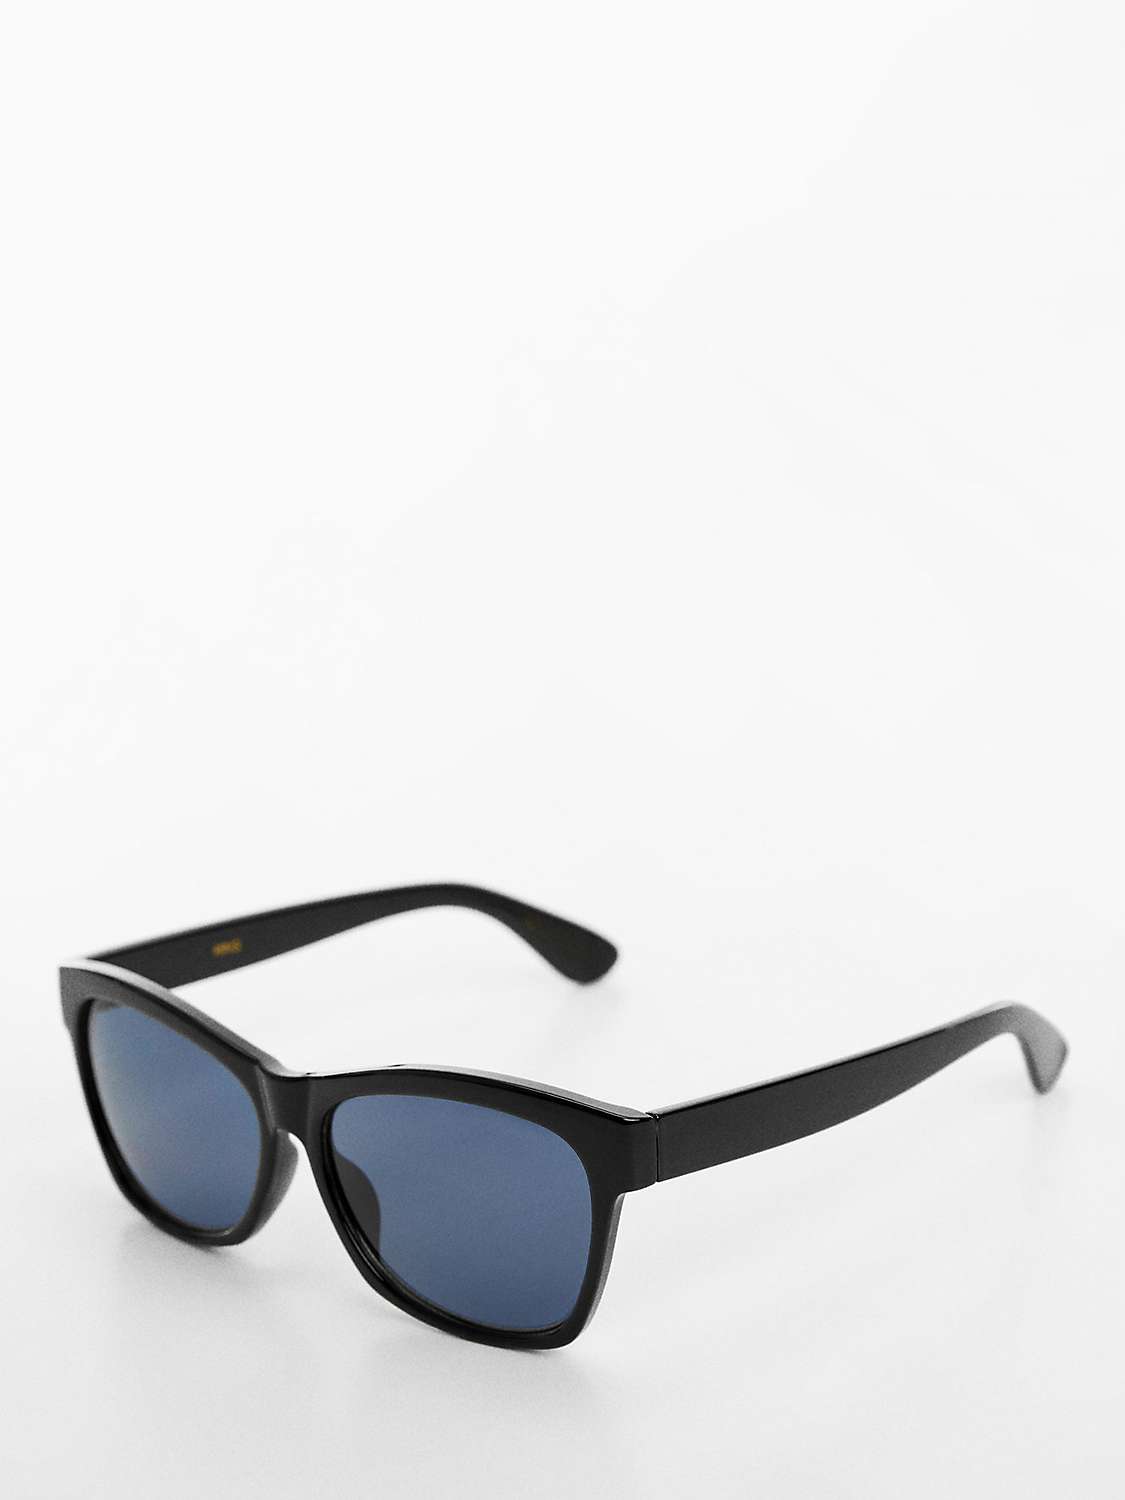 Buy Mango Women's Milan D-Frame Sunglasses Online at johnlewis.com